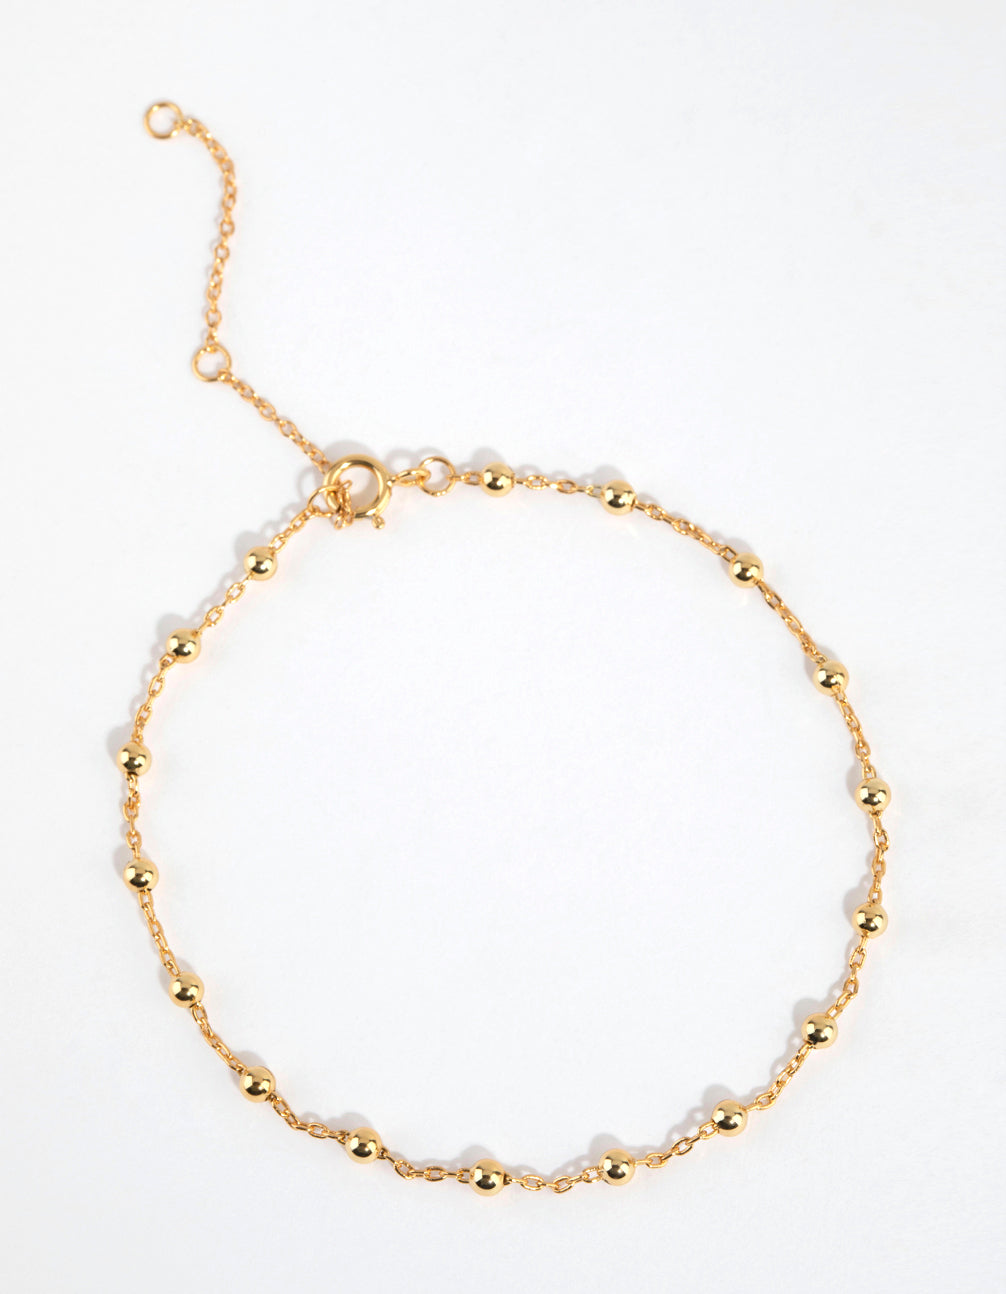 Gold Plated Sterling Silver Ball Chain Bracelet or Anklet - Lovisa